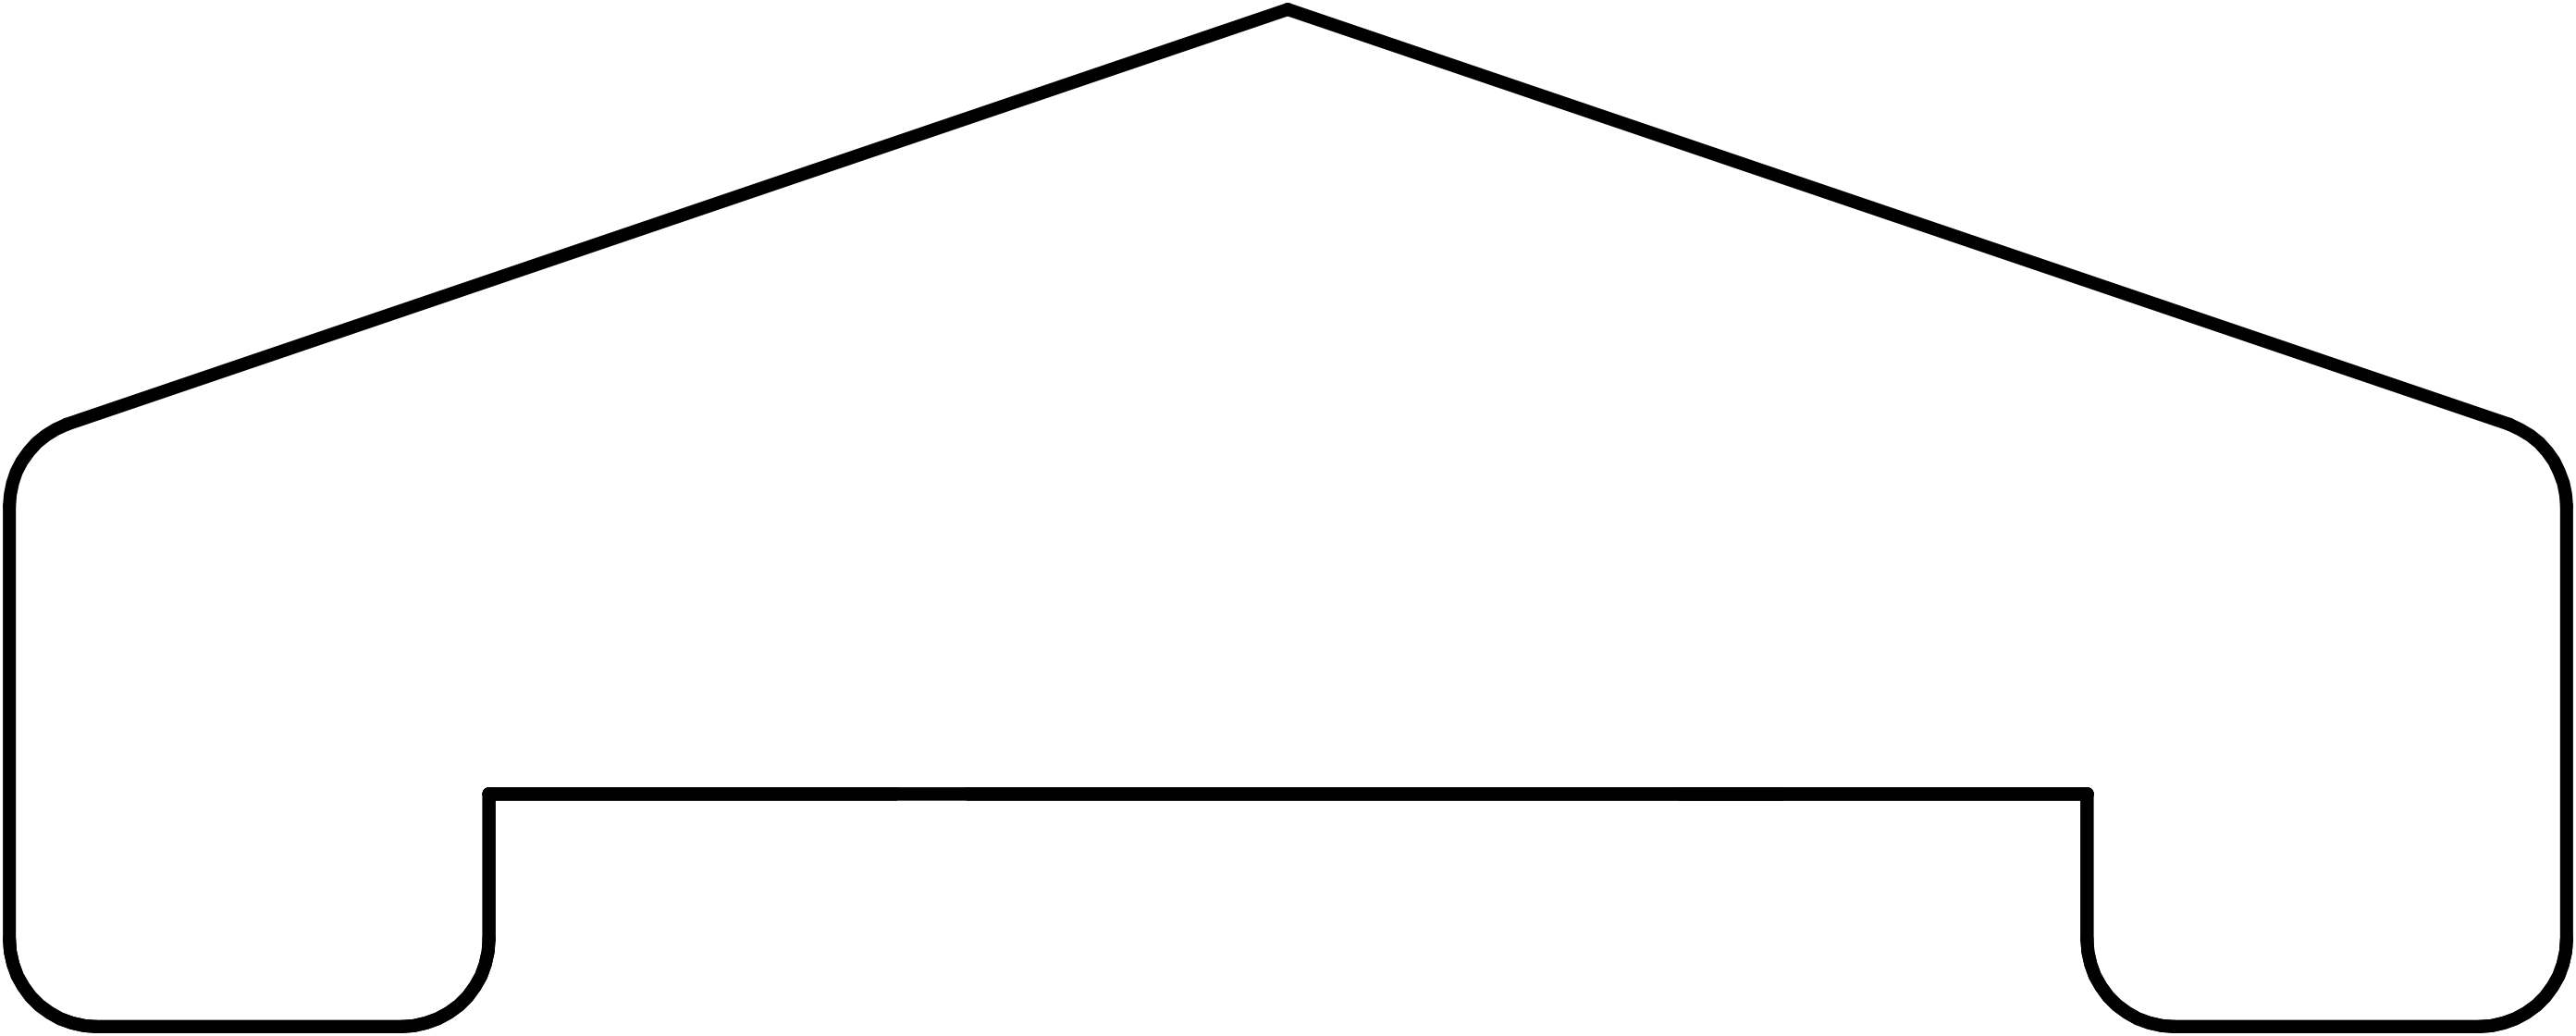 Abdecklatte Hartholz Pyramide, 180cm